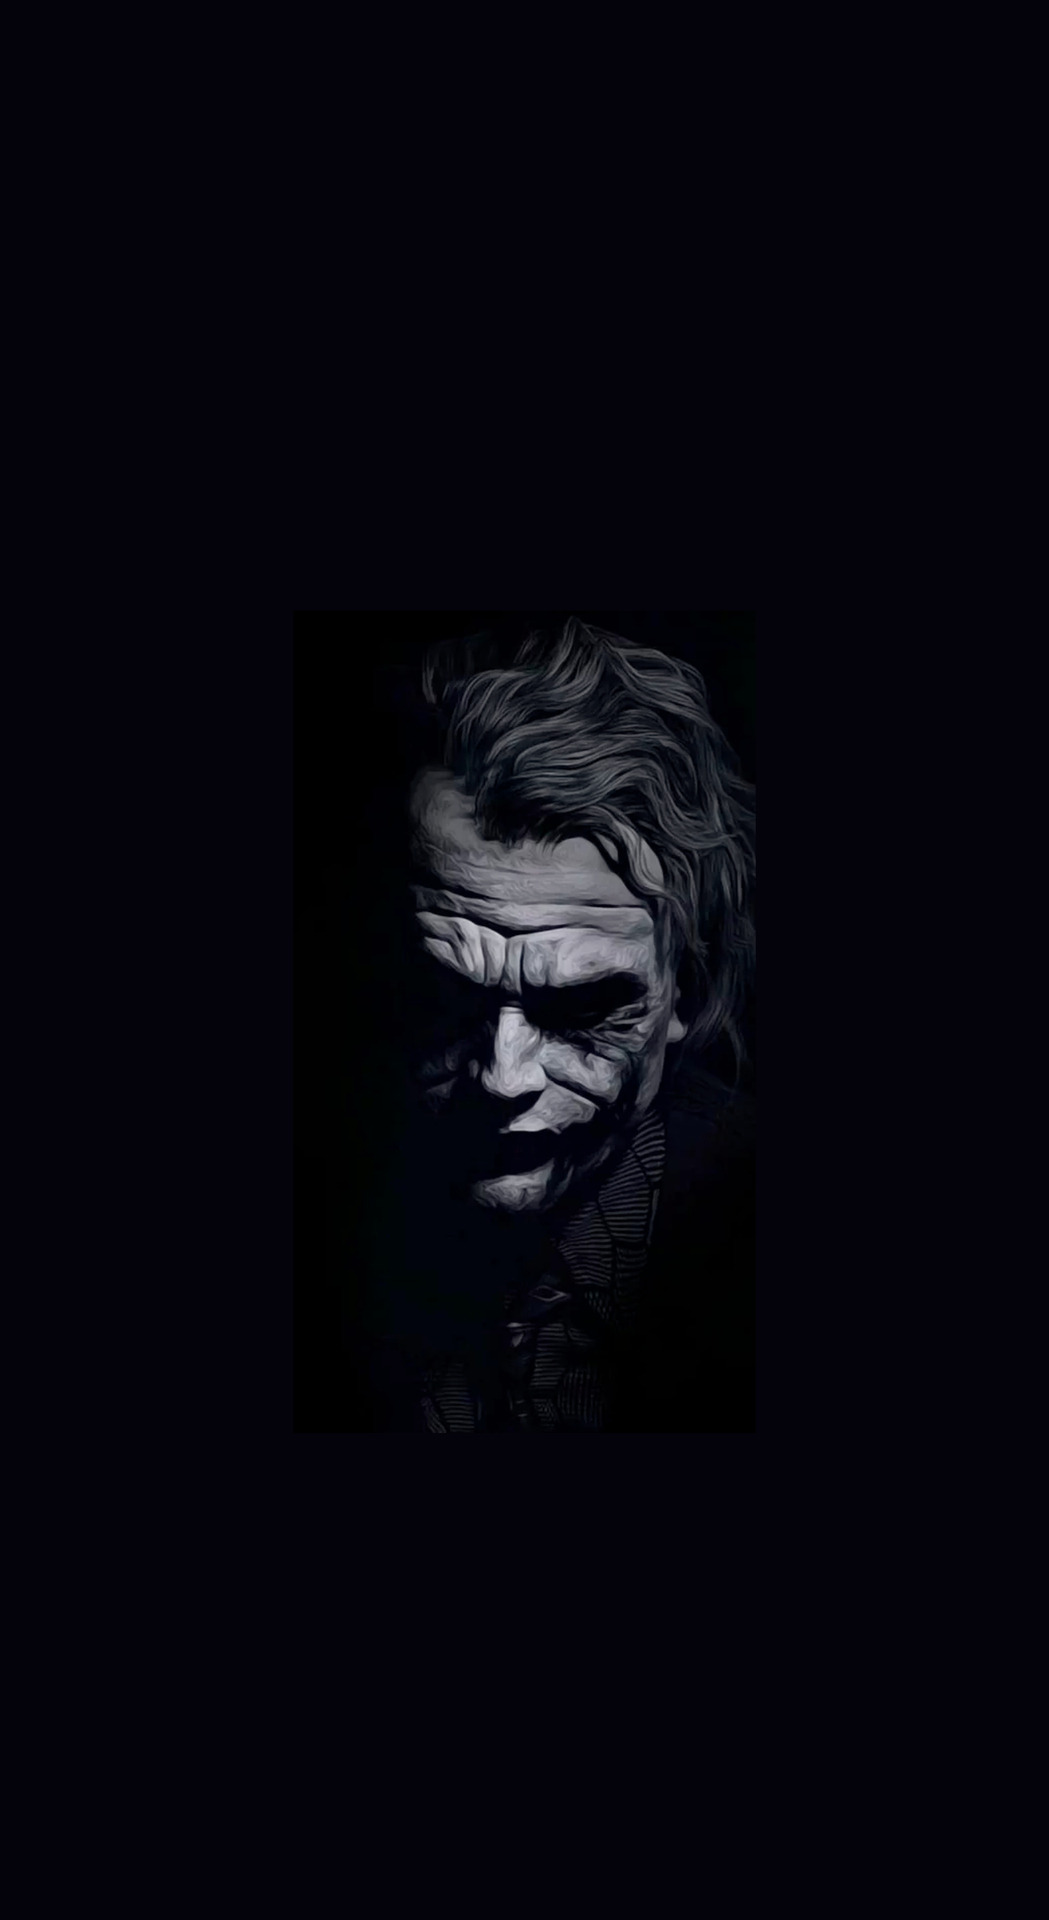 40 Gambar Joker Wallpaper Hd Iphone X terbaru 2020